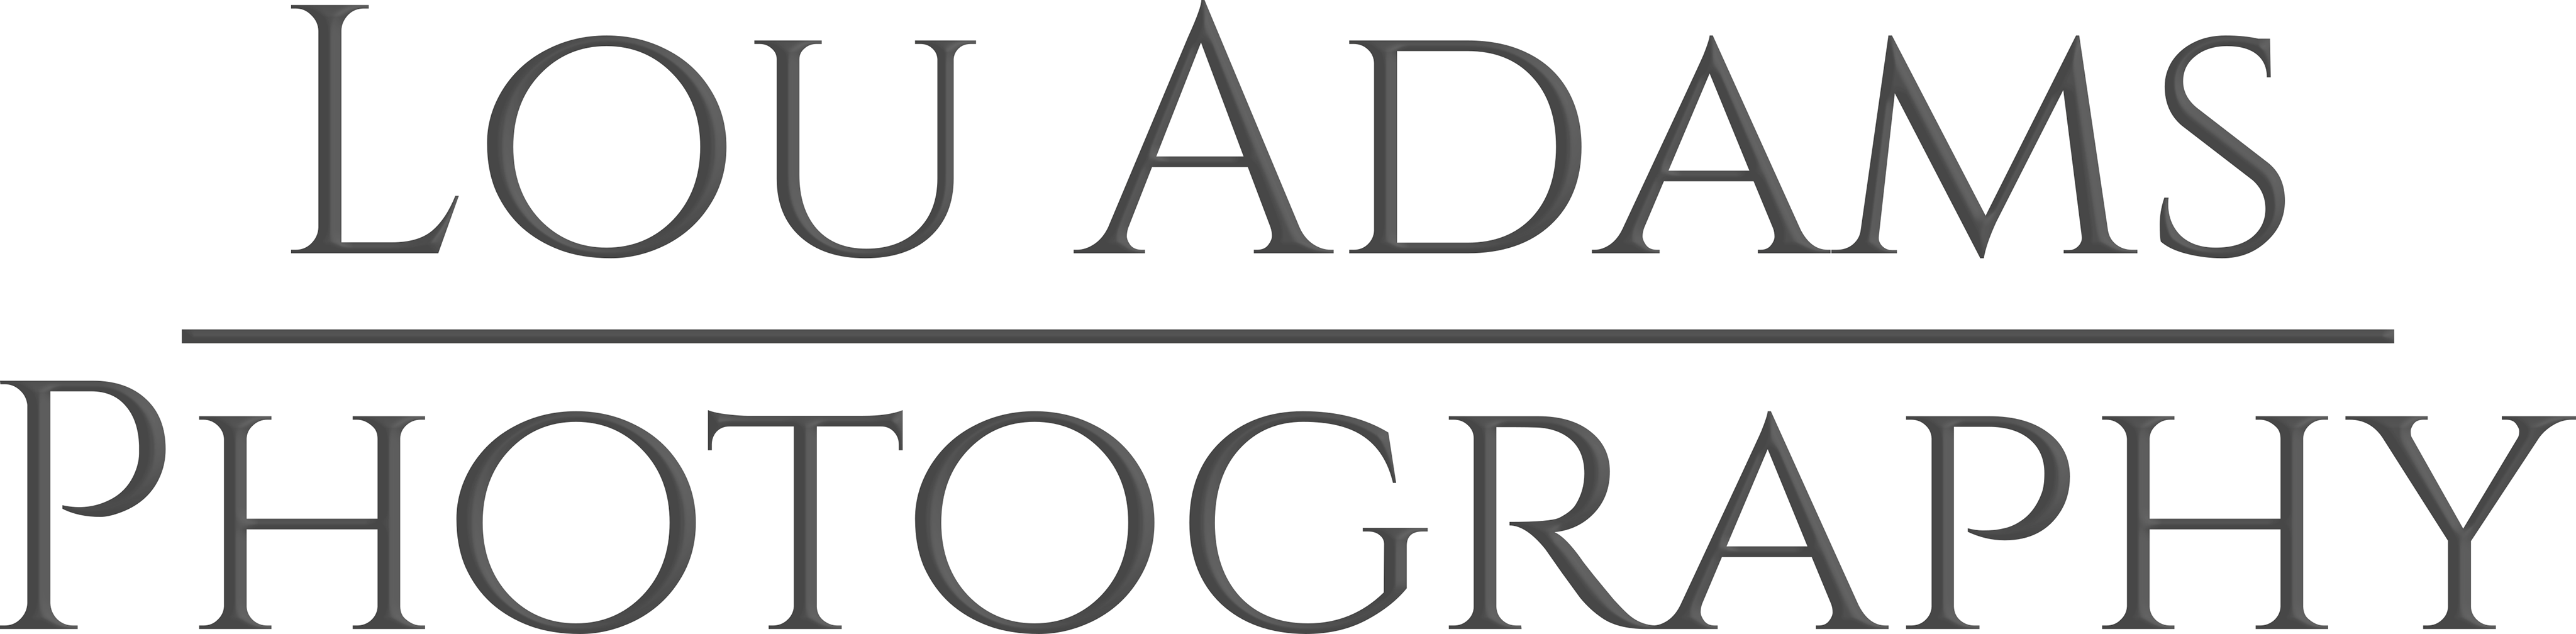 Lou Adams Photography logo